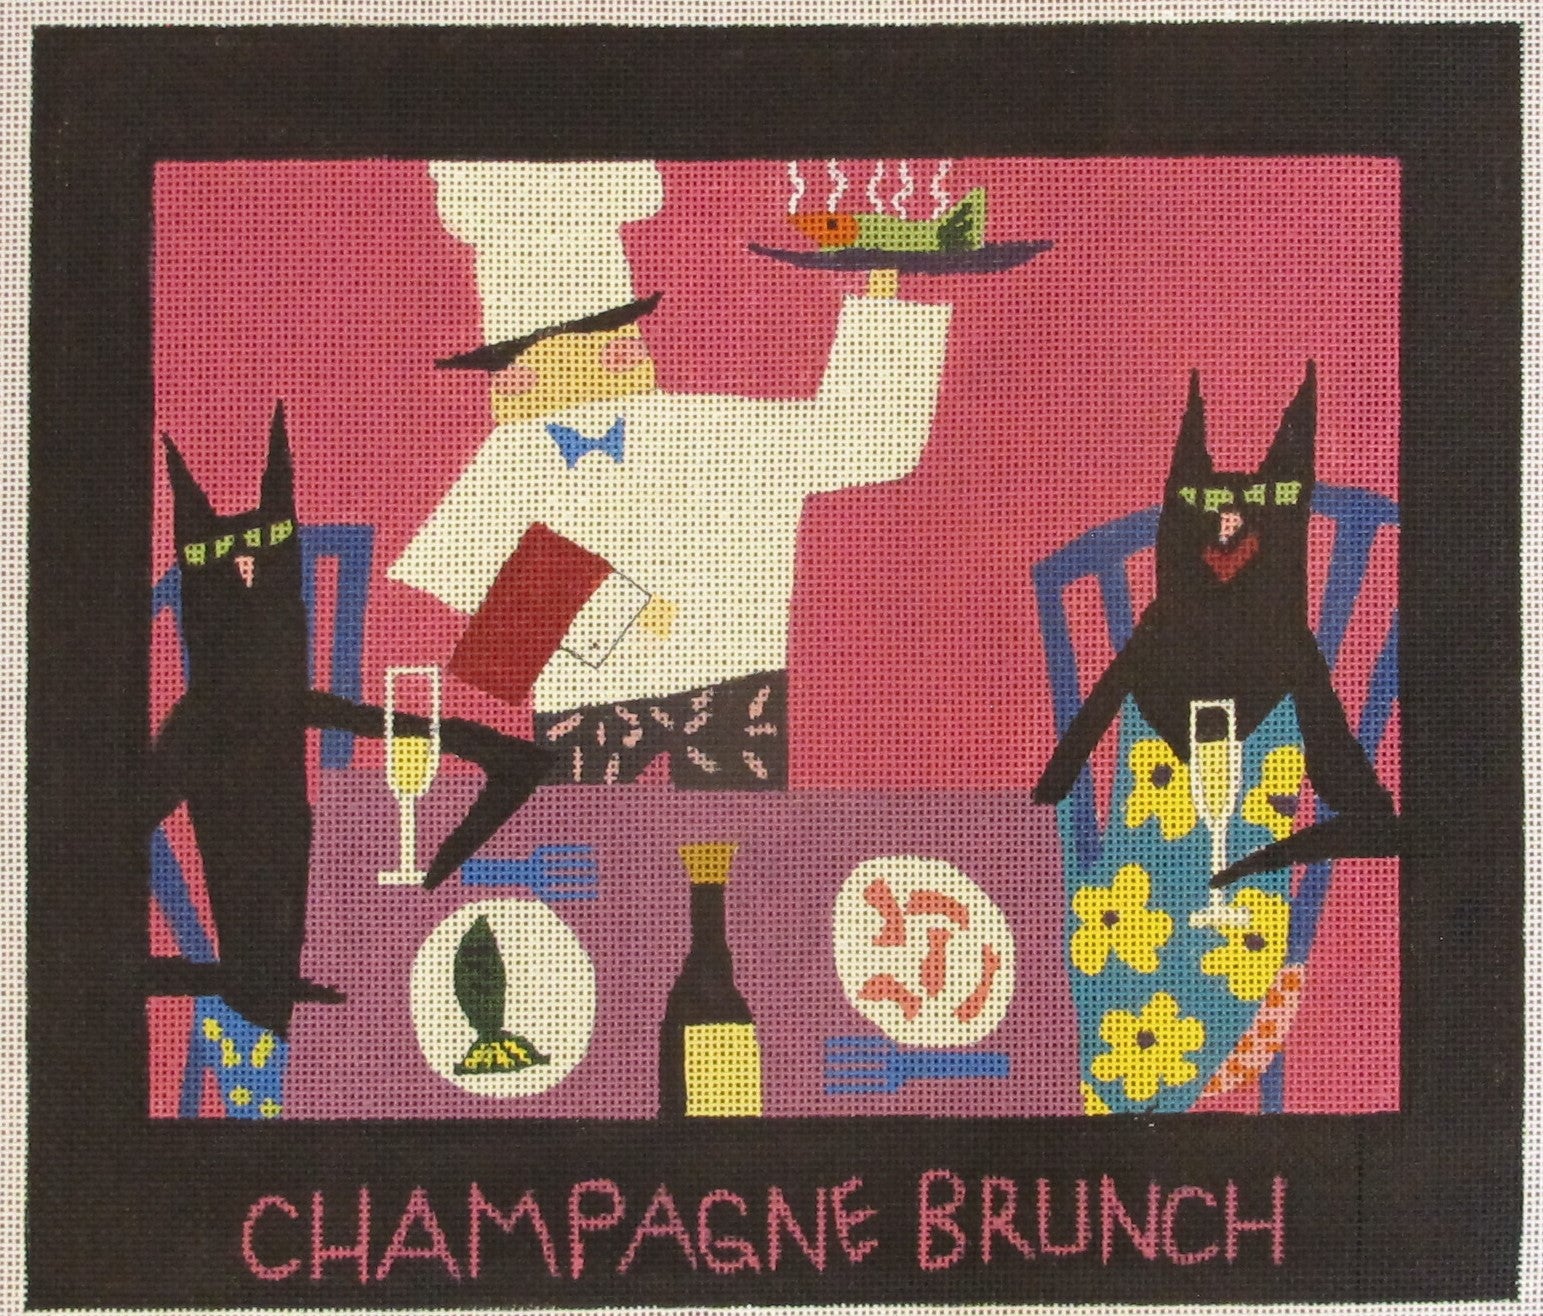 Champagne Brunch